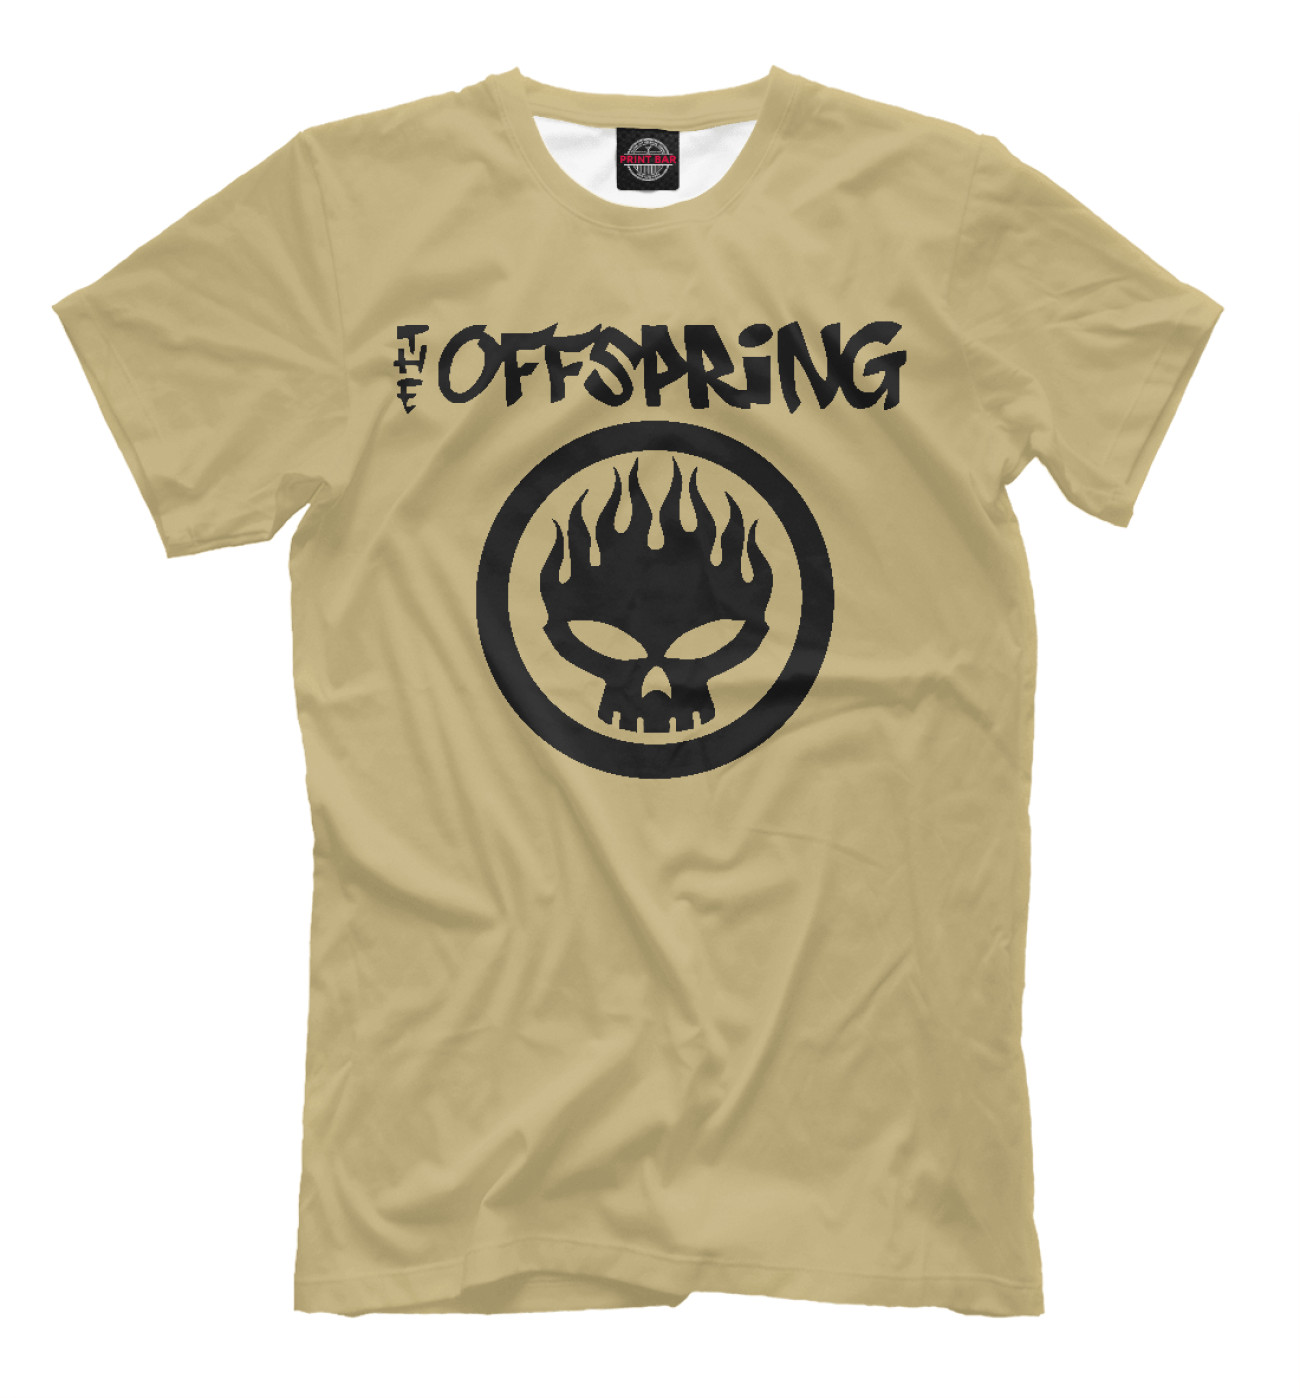 Мужская Футболка The Offspring, артикул: OFS-383038-fut-2